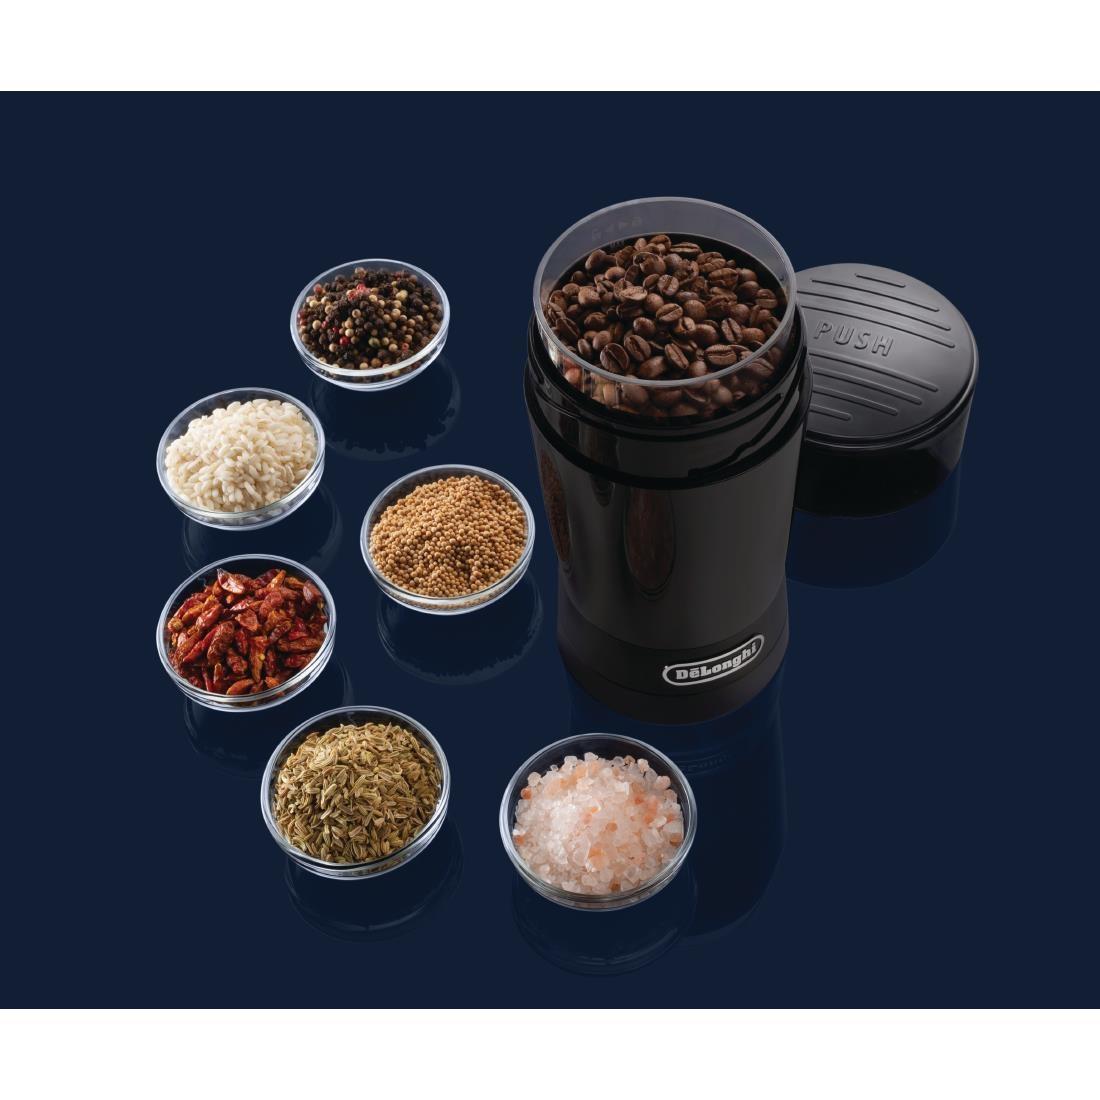 DeLonghi Coffee Bean Grinder KG200 - FS137  - 4